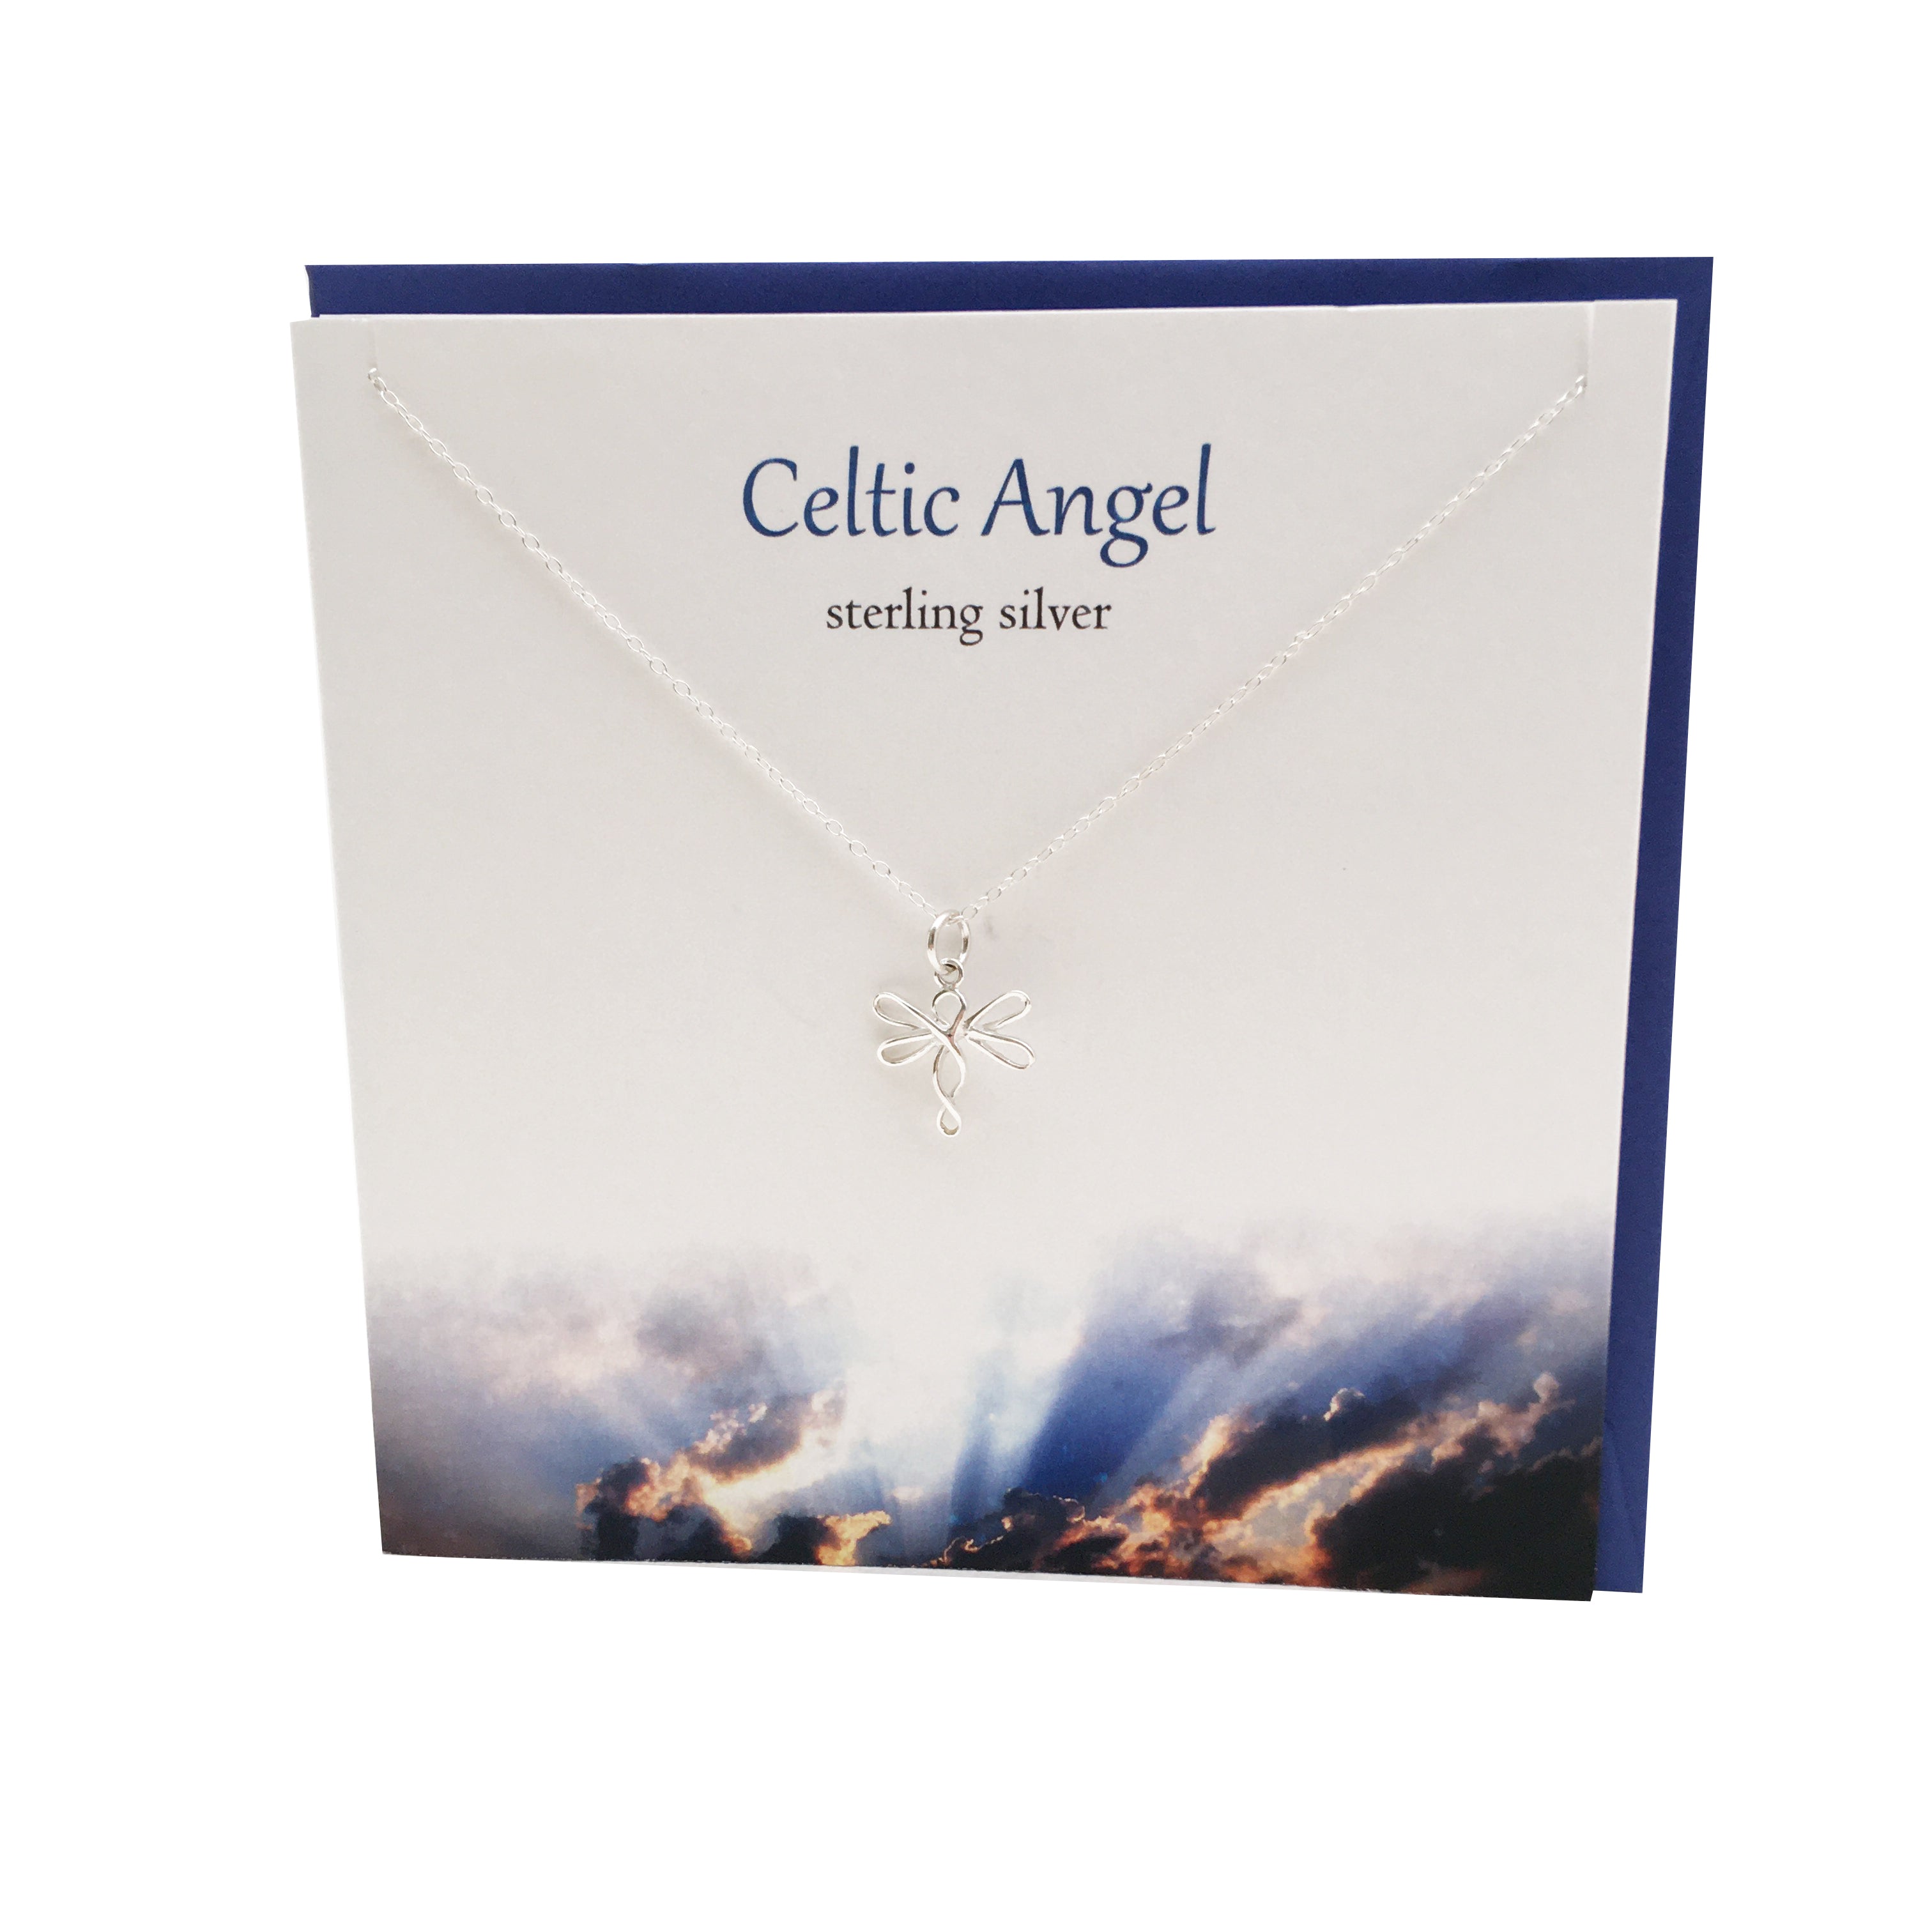 Celtic Angel sterling silver pendant | The Silver Studio Scotland